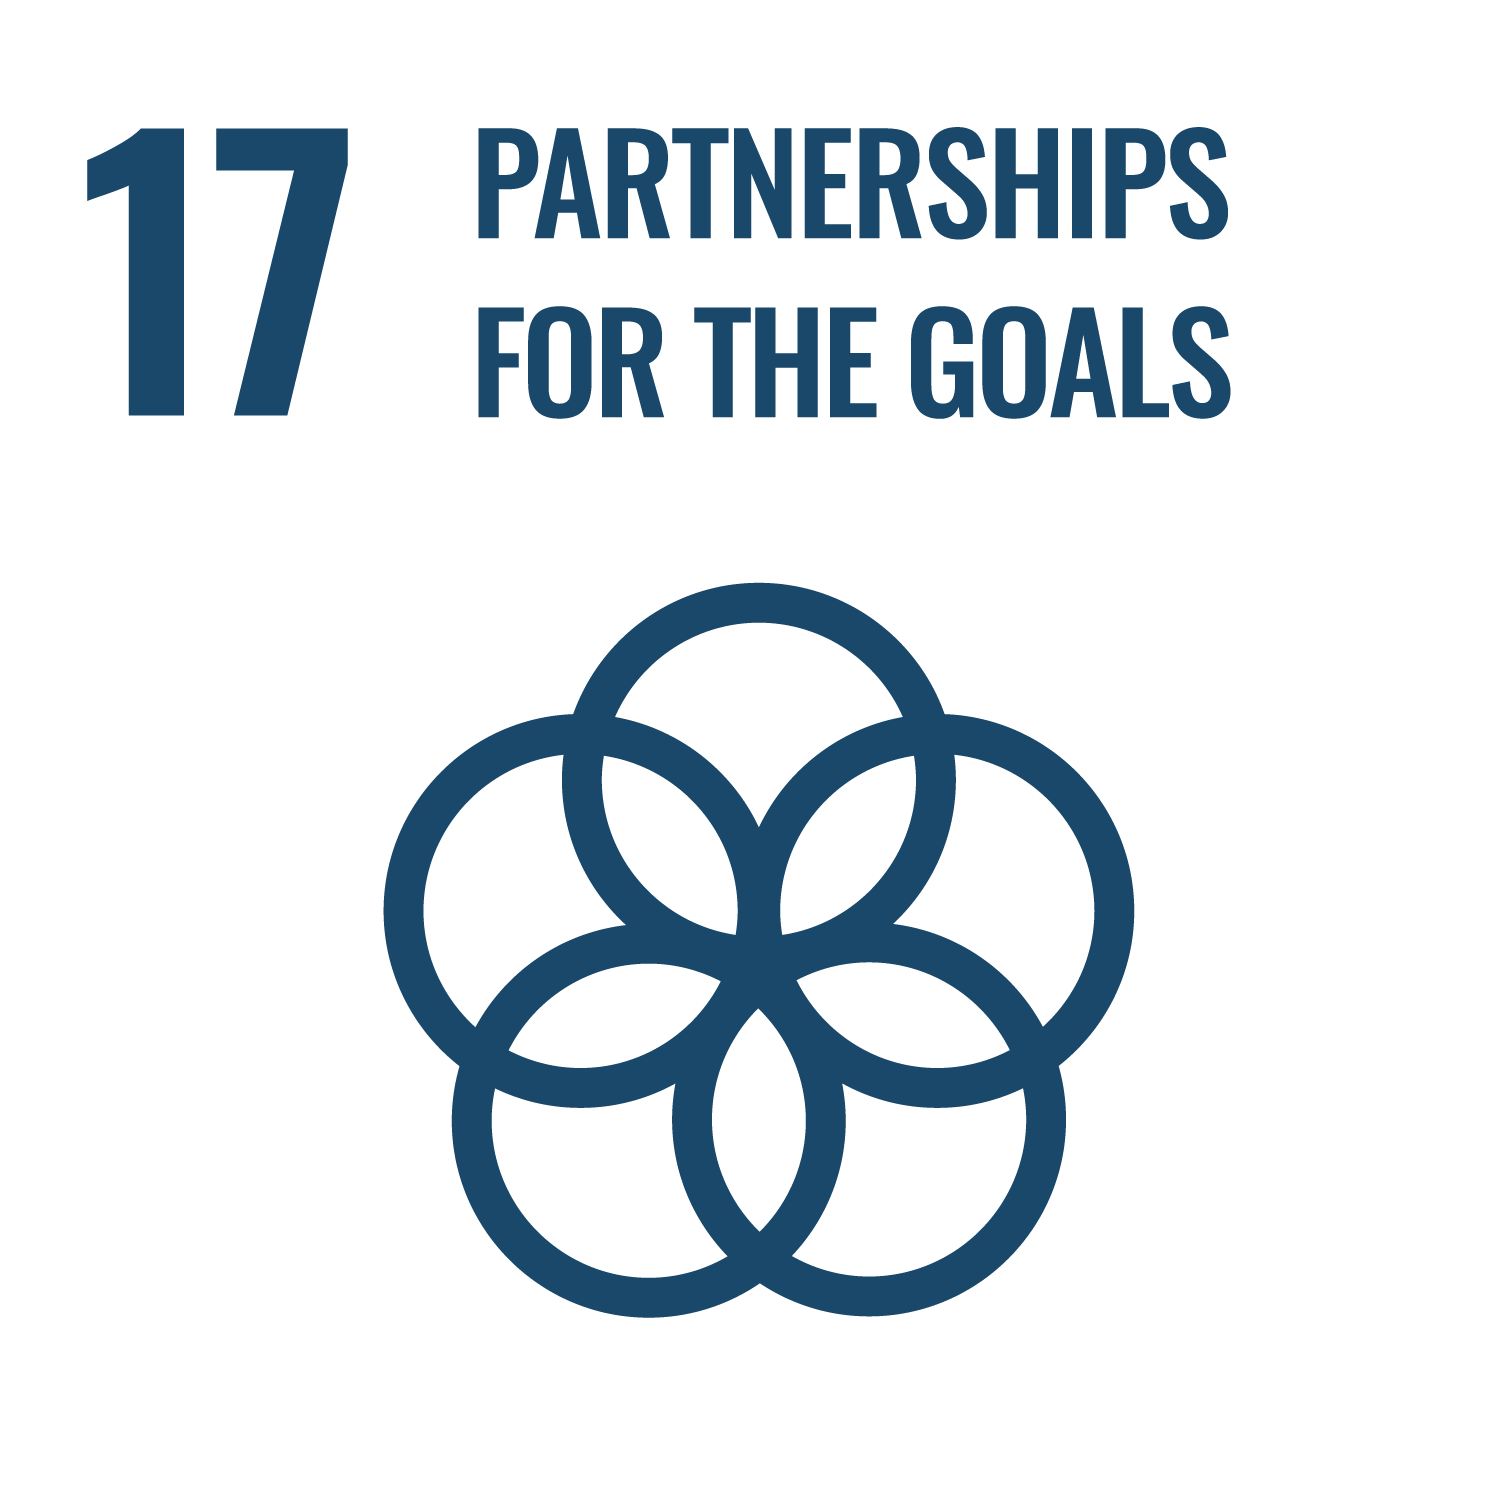 Partnerships for the goals - Goal 17